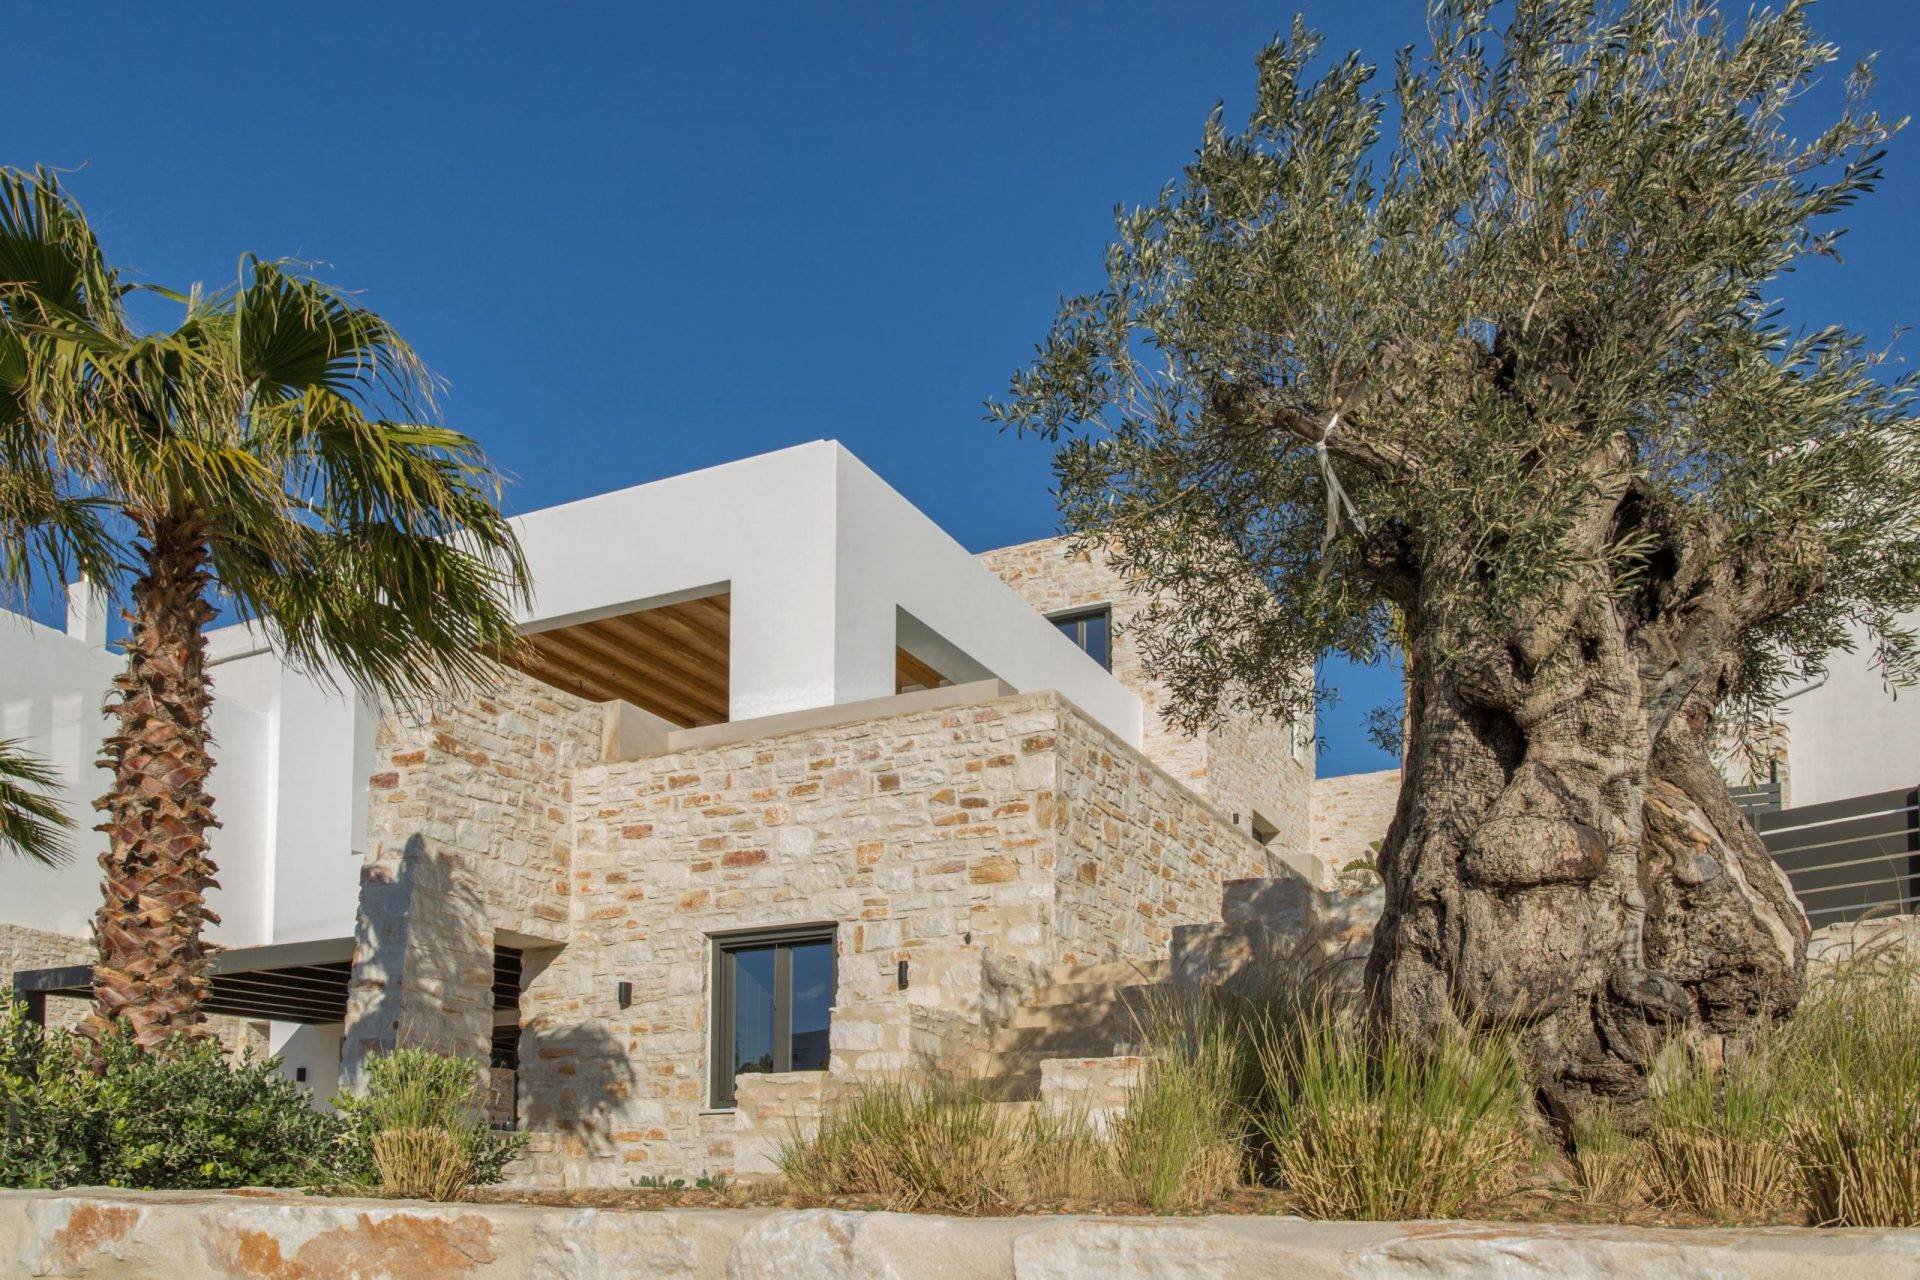 Rent Traditional Villa Olea In Paros Greece - Exterior View